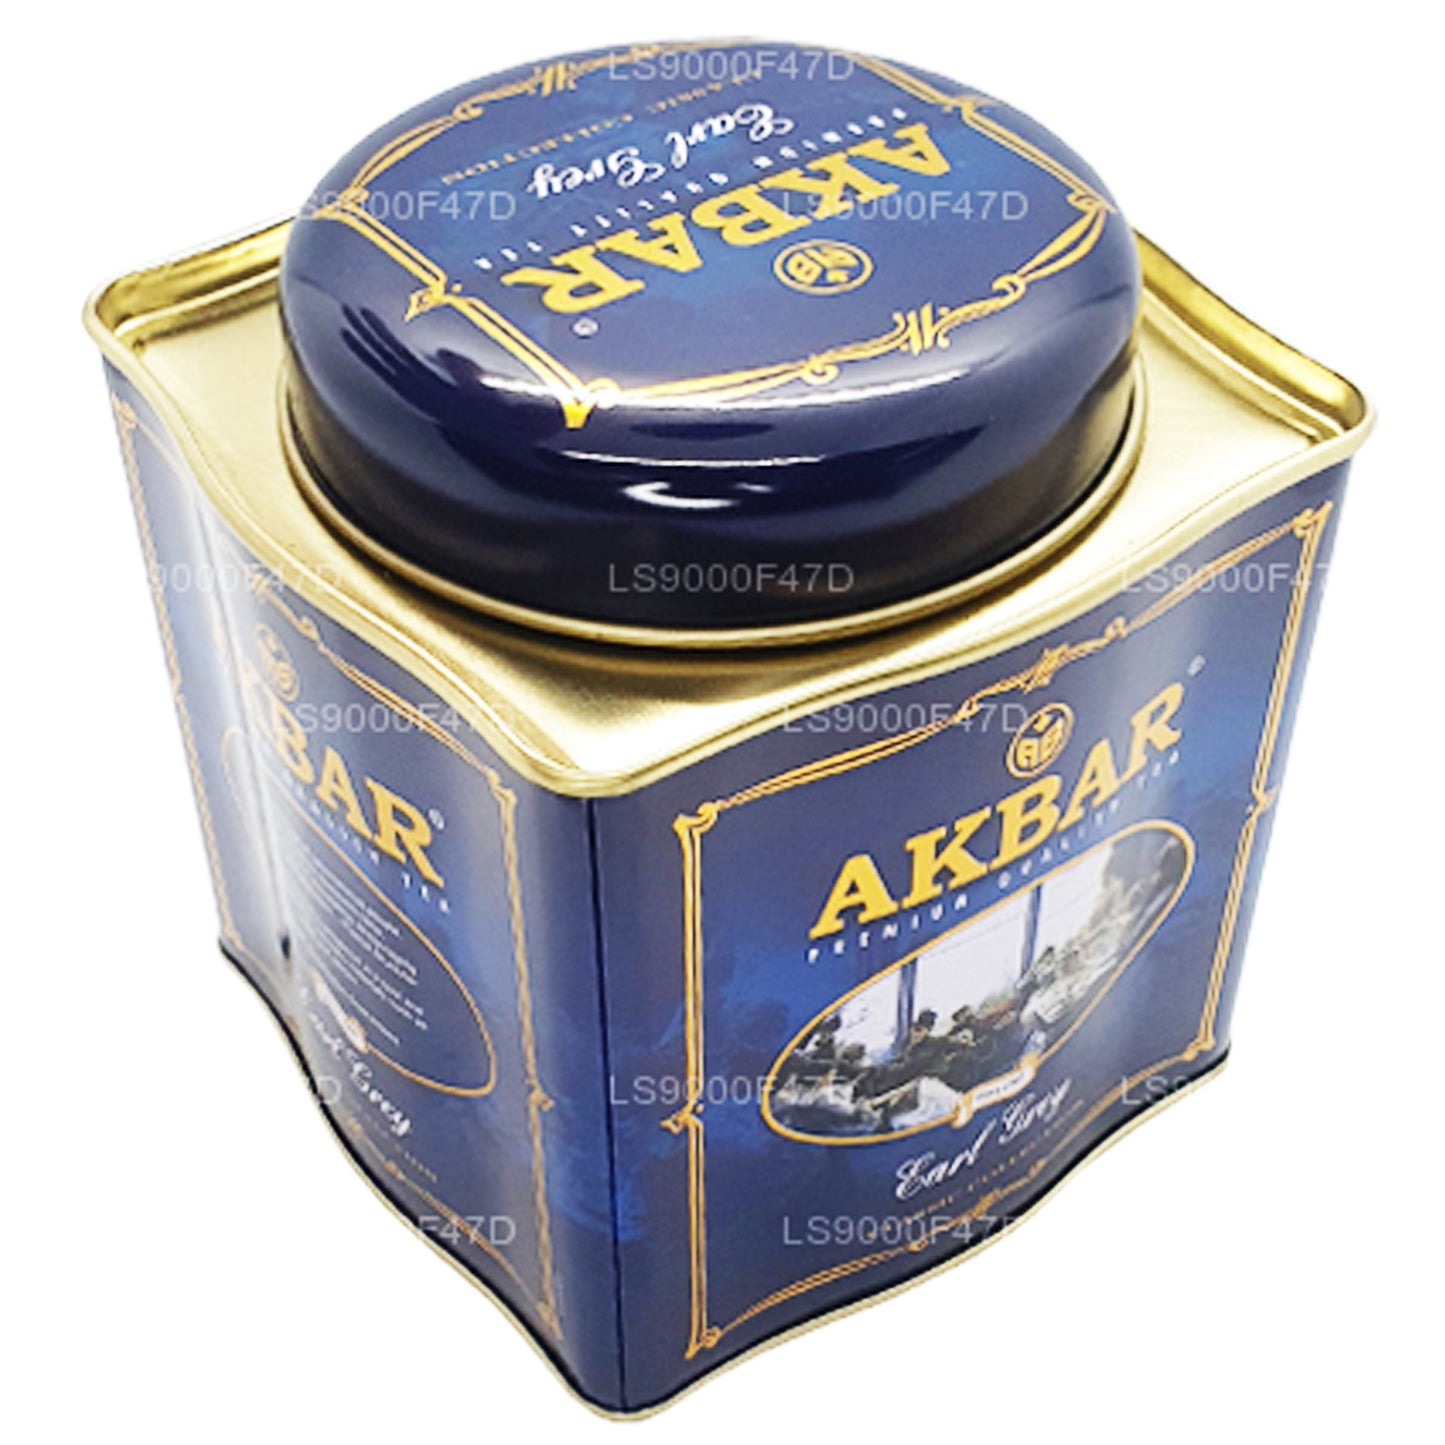 Akbar クラシックアールグレイリーフティー (250g) 缶